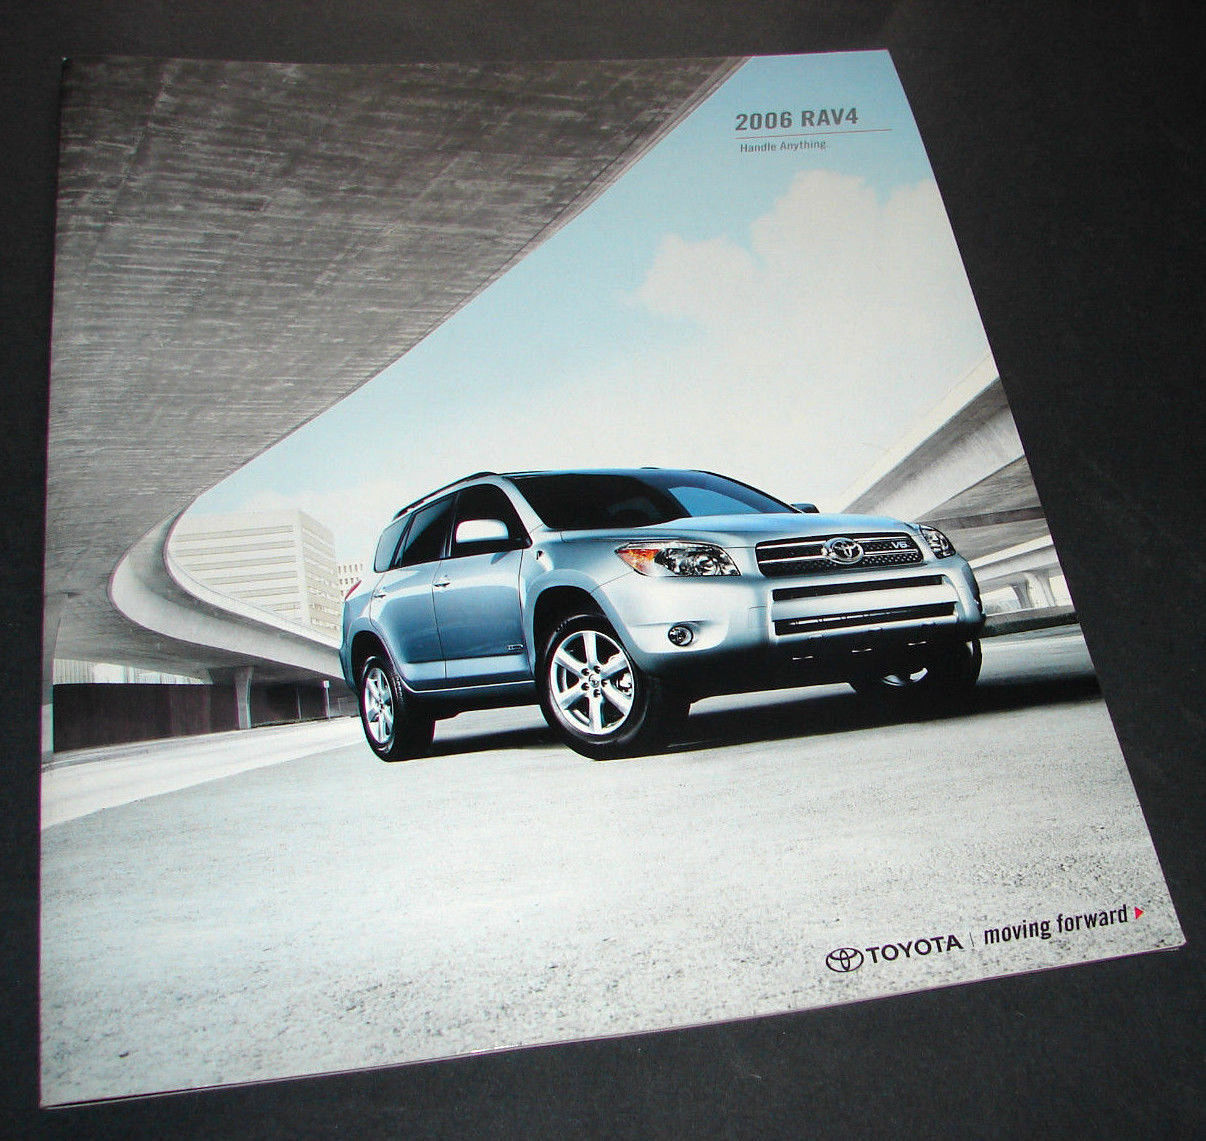 2006 TOYOTA RAV4 New Automobile Brochure Car Booklet 9"x11" NO RESERVE - $14.99